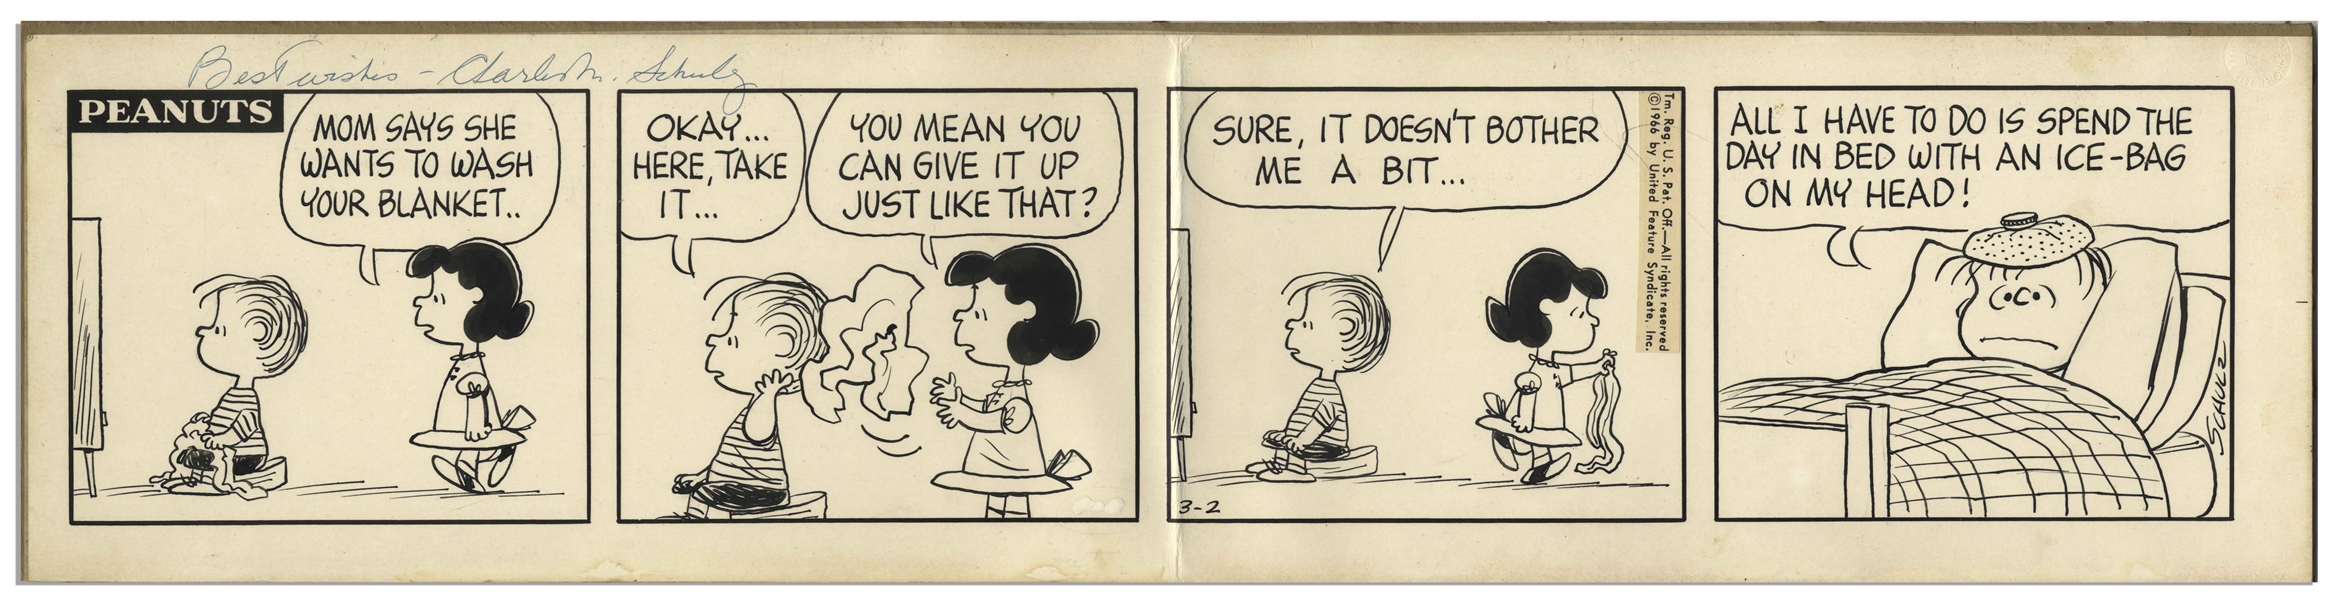 Charles Schulz Original Hand-Drawn ''Peanuts'' Comic Strip -- Linus Misses His Blanket in This 1966 Strip